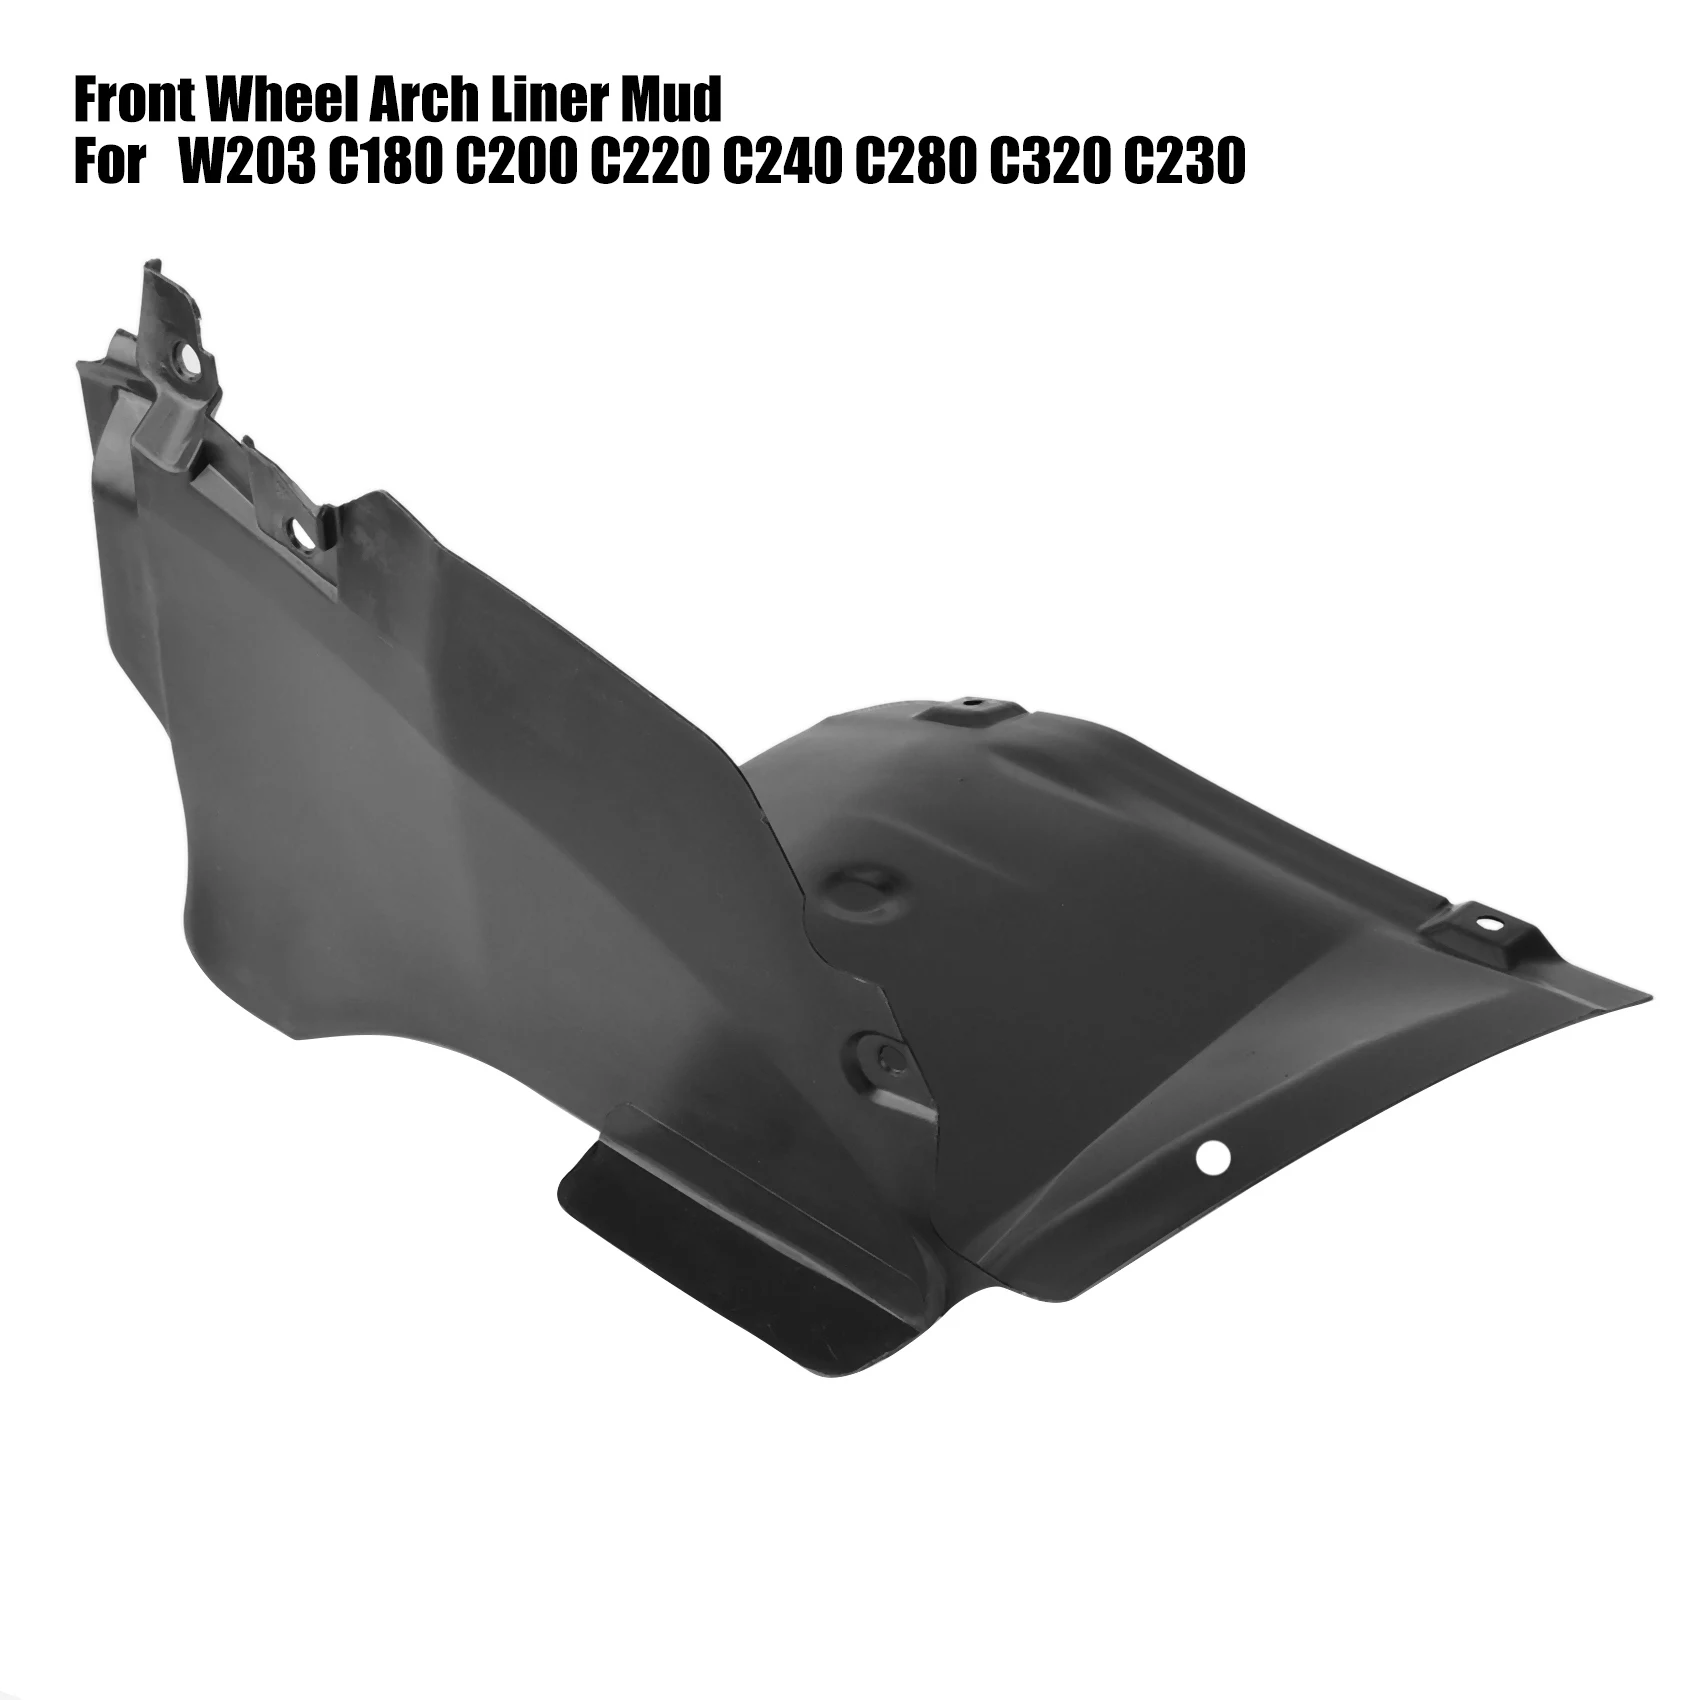 

Left Front Wheel Arch Liner Mud Guard Fender Liner 2038840722 for Mercedes W203 C180 C200 C220 C240 C280 C320 C230